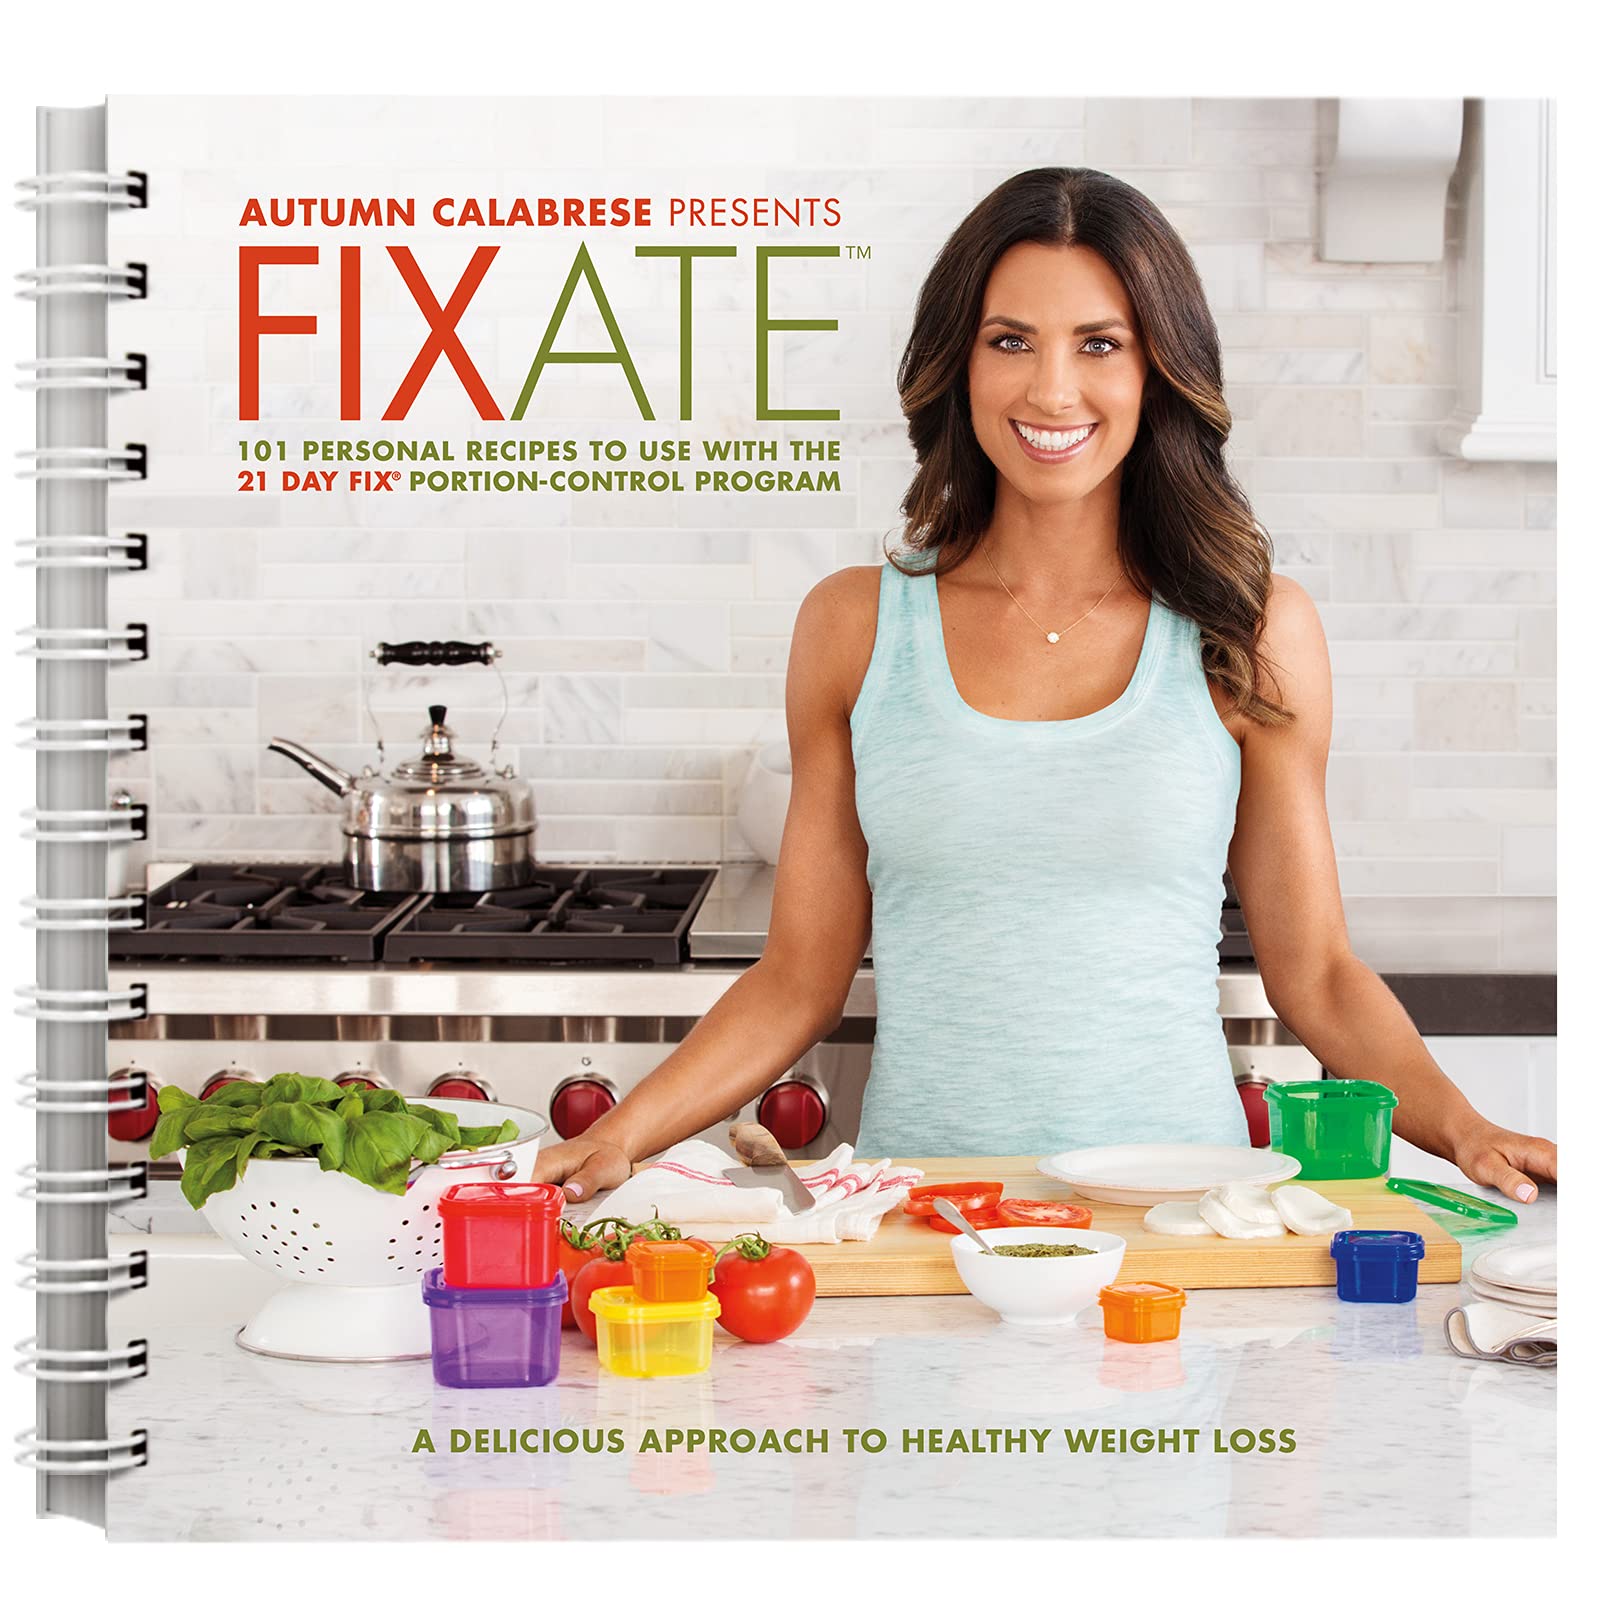 Beachbody Autumn Calabrese's FIXATE Recipe Book, 21 Day Fix Recipes, Healthy Cookbook, Easy to Follow Meal Plan Program for Portion Control, Vegan, Gluten Free, Vegetarian, Paleo, 101 Recipes